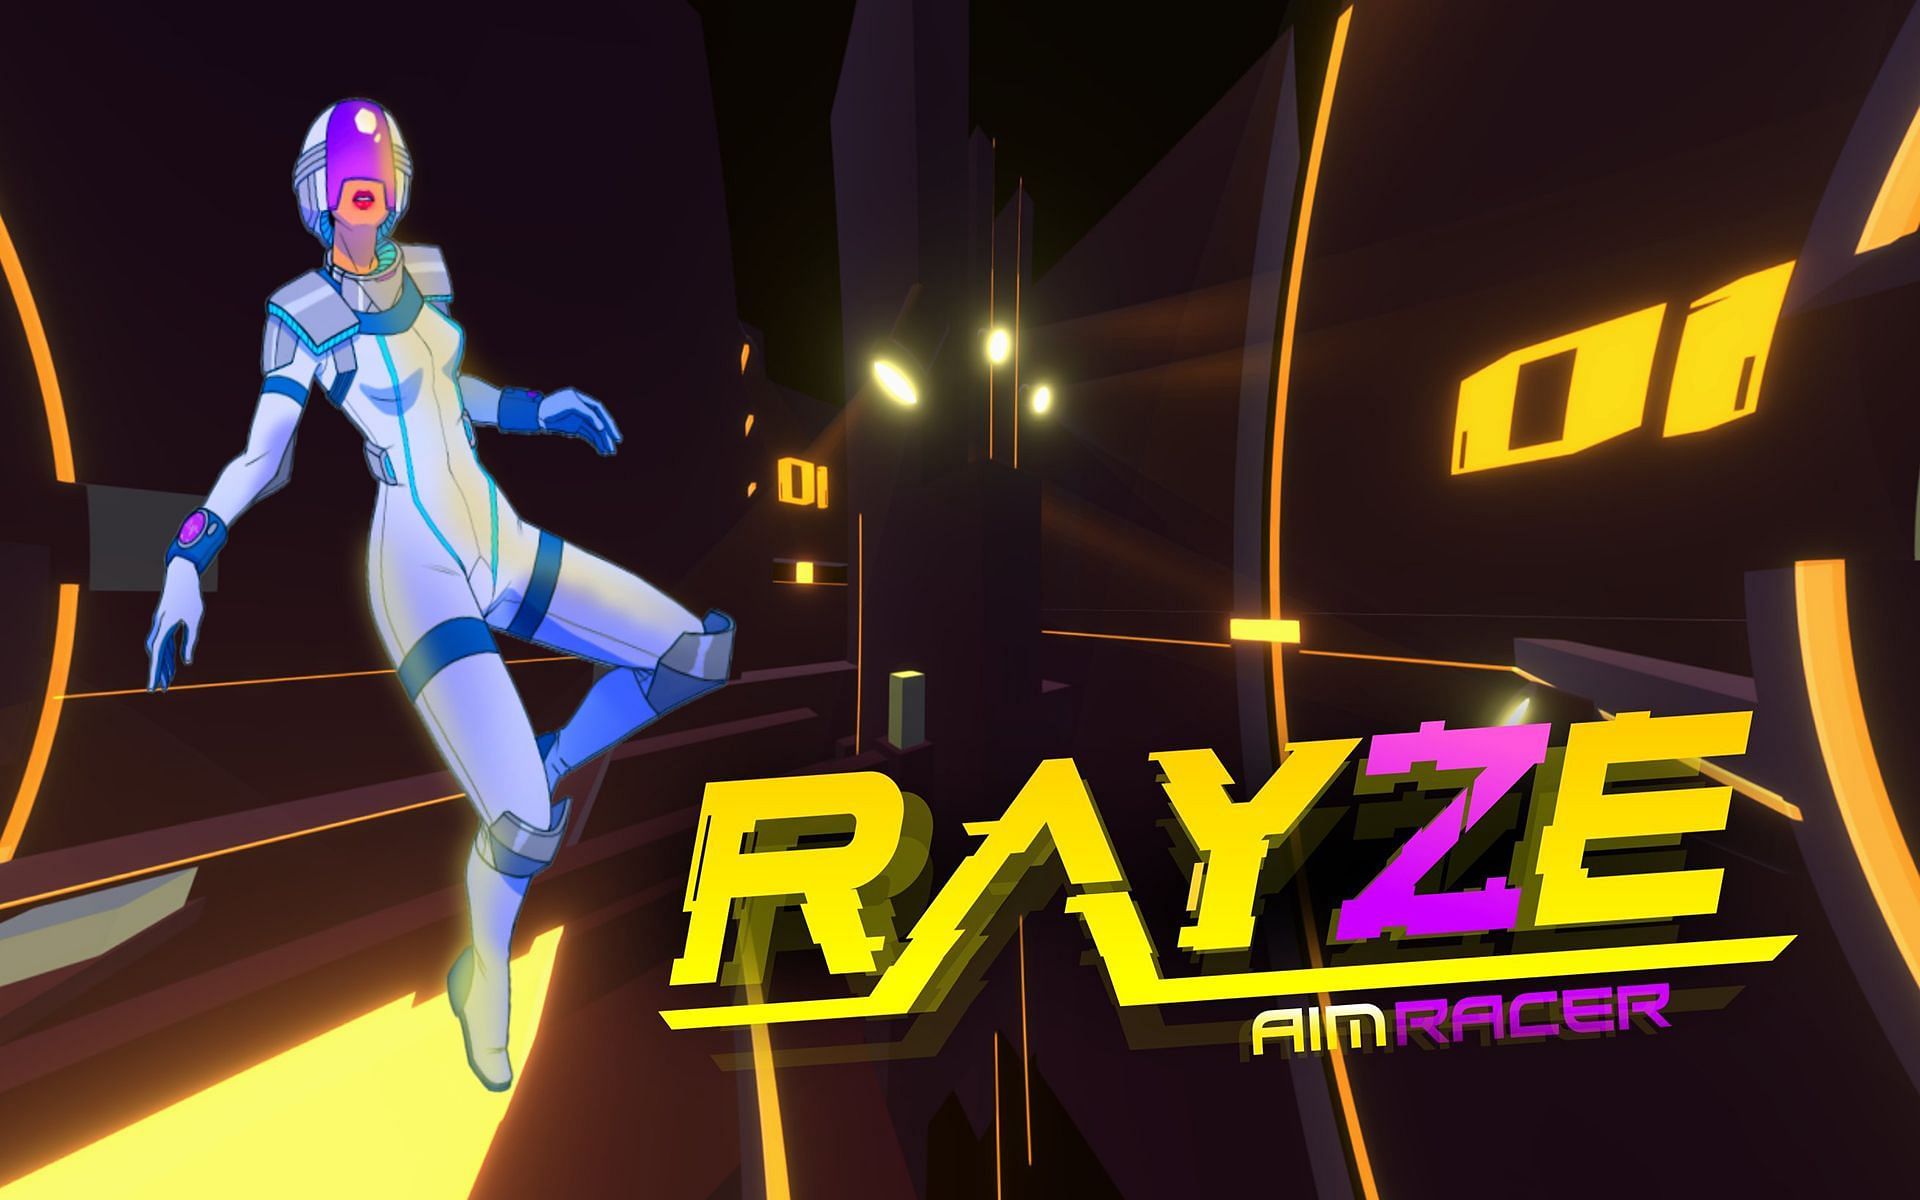 RAYZE, a new aim racer game (Image by DreamSkillz)